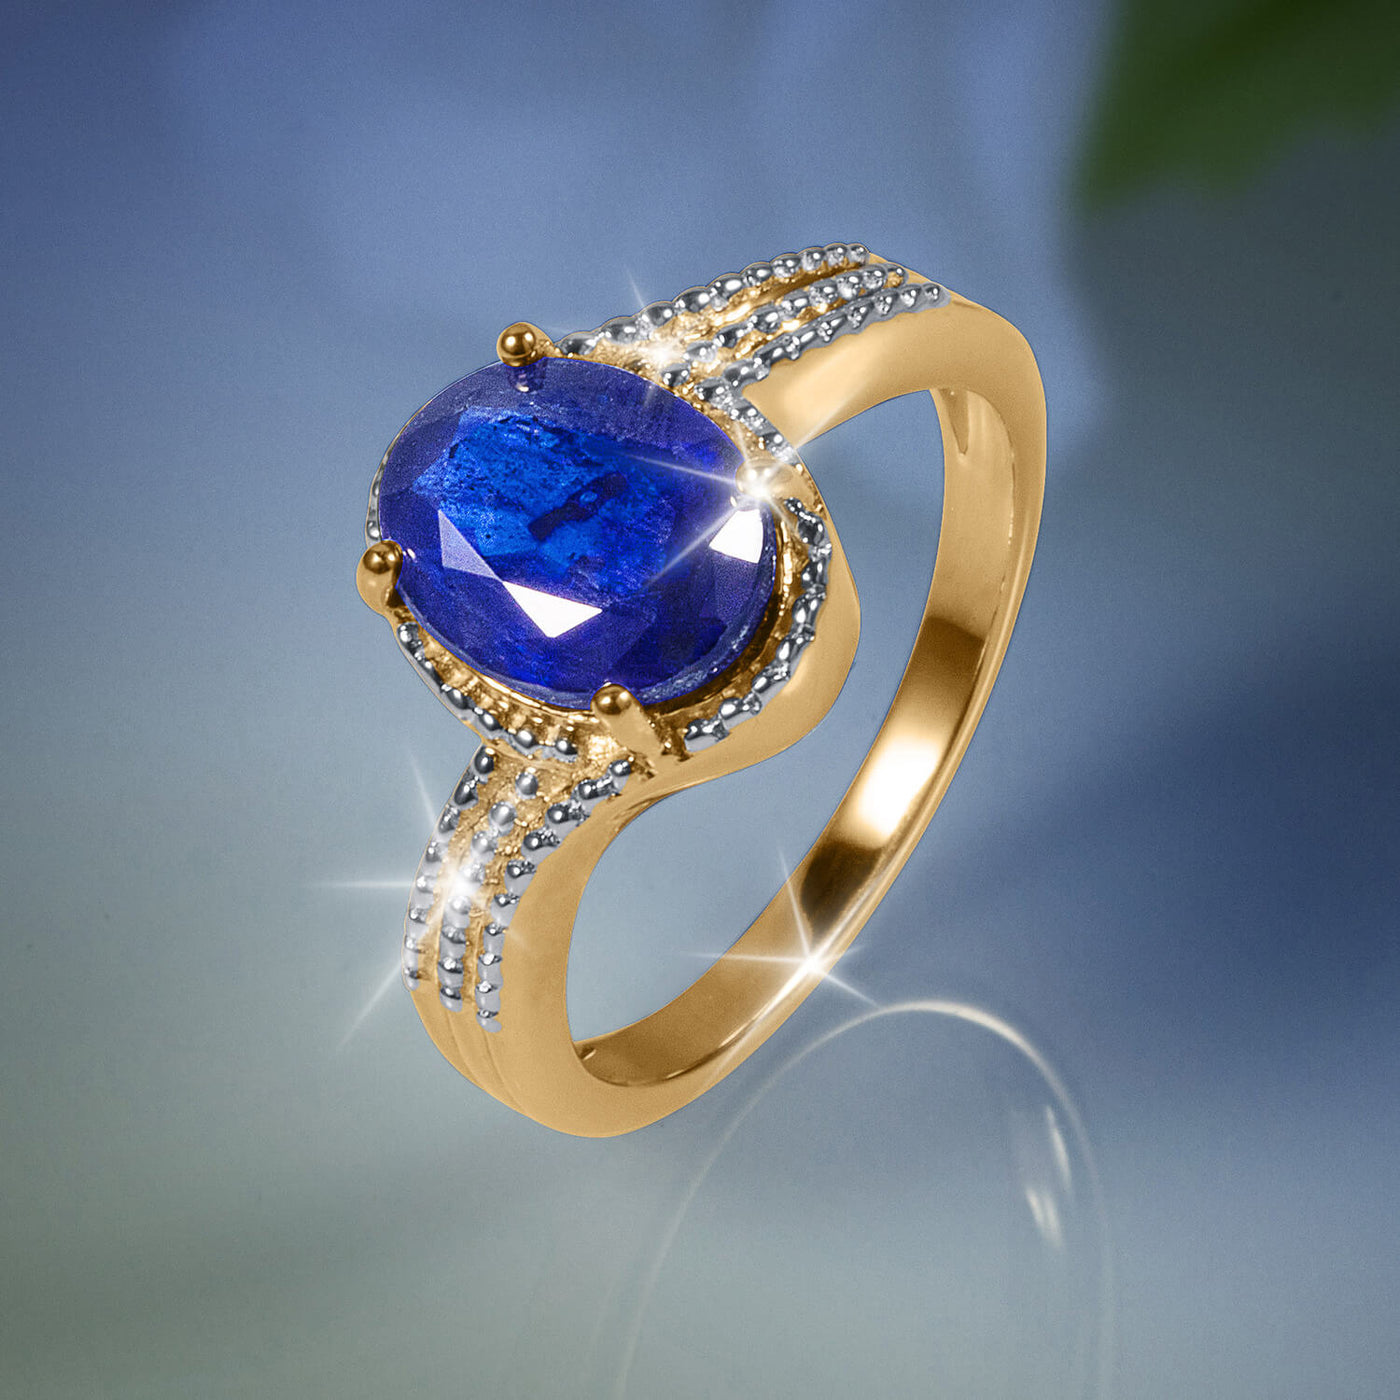 Daniel Steiger Twisted Embrace Sapphire Ring